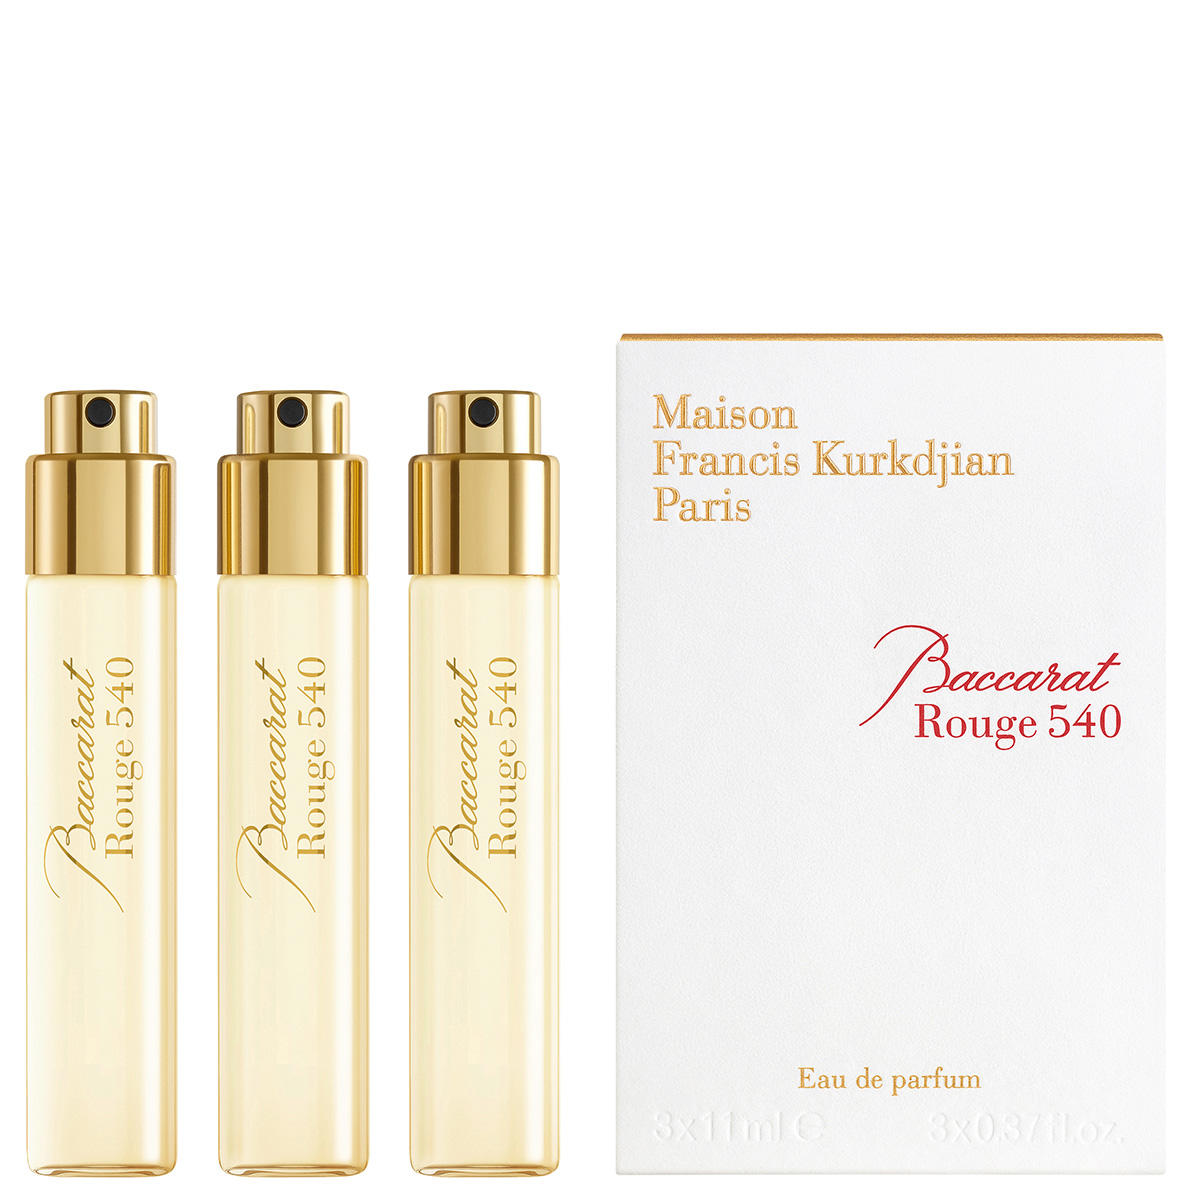 Maison Francis Kurkdjian Paris Baccarat Rouge 540 Eau de Parfum Refill Verpakking met 3 x 11 ml - 2